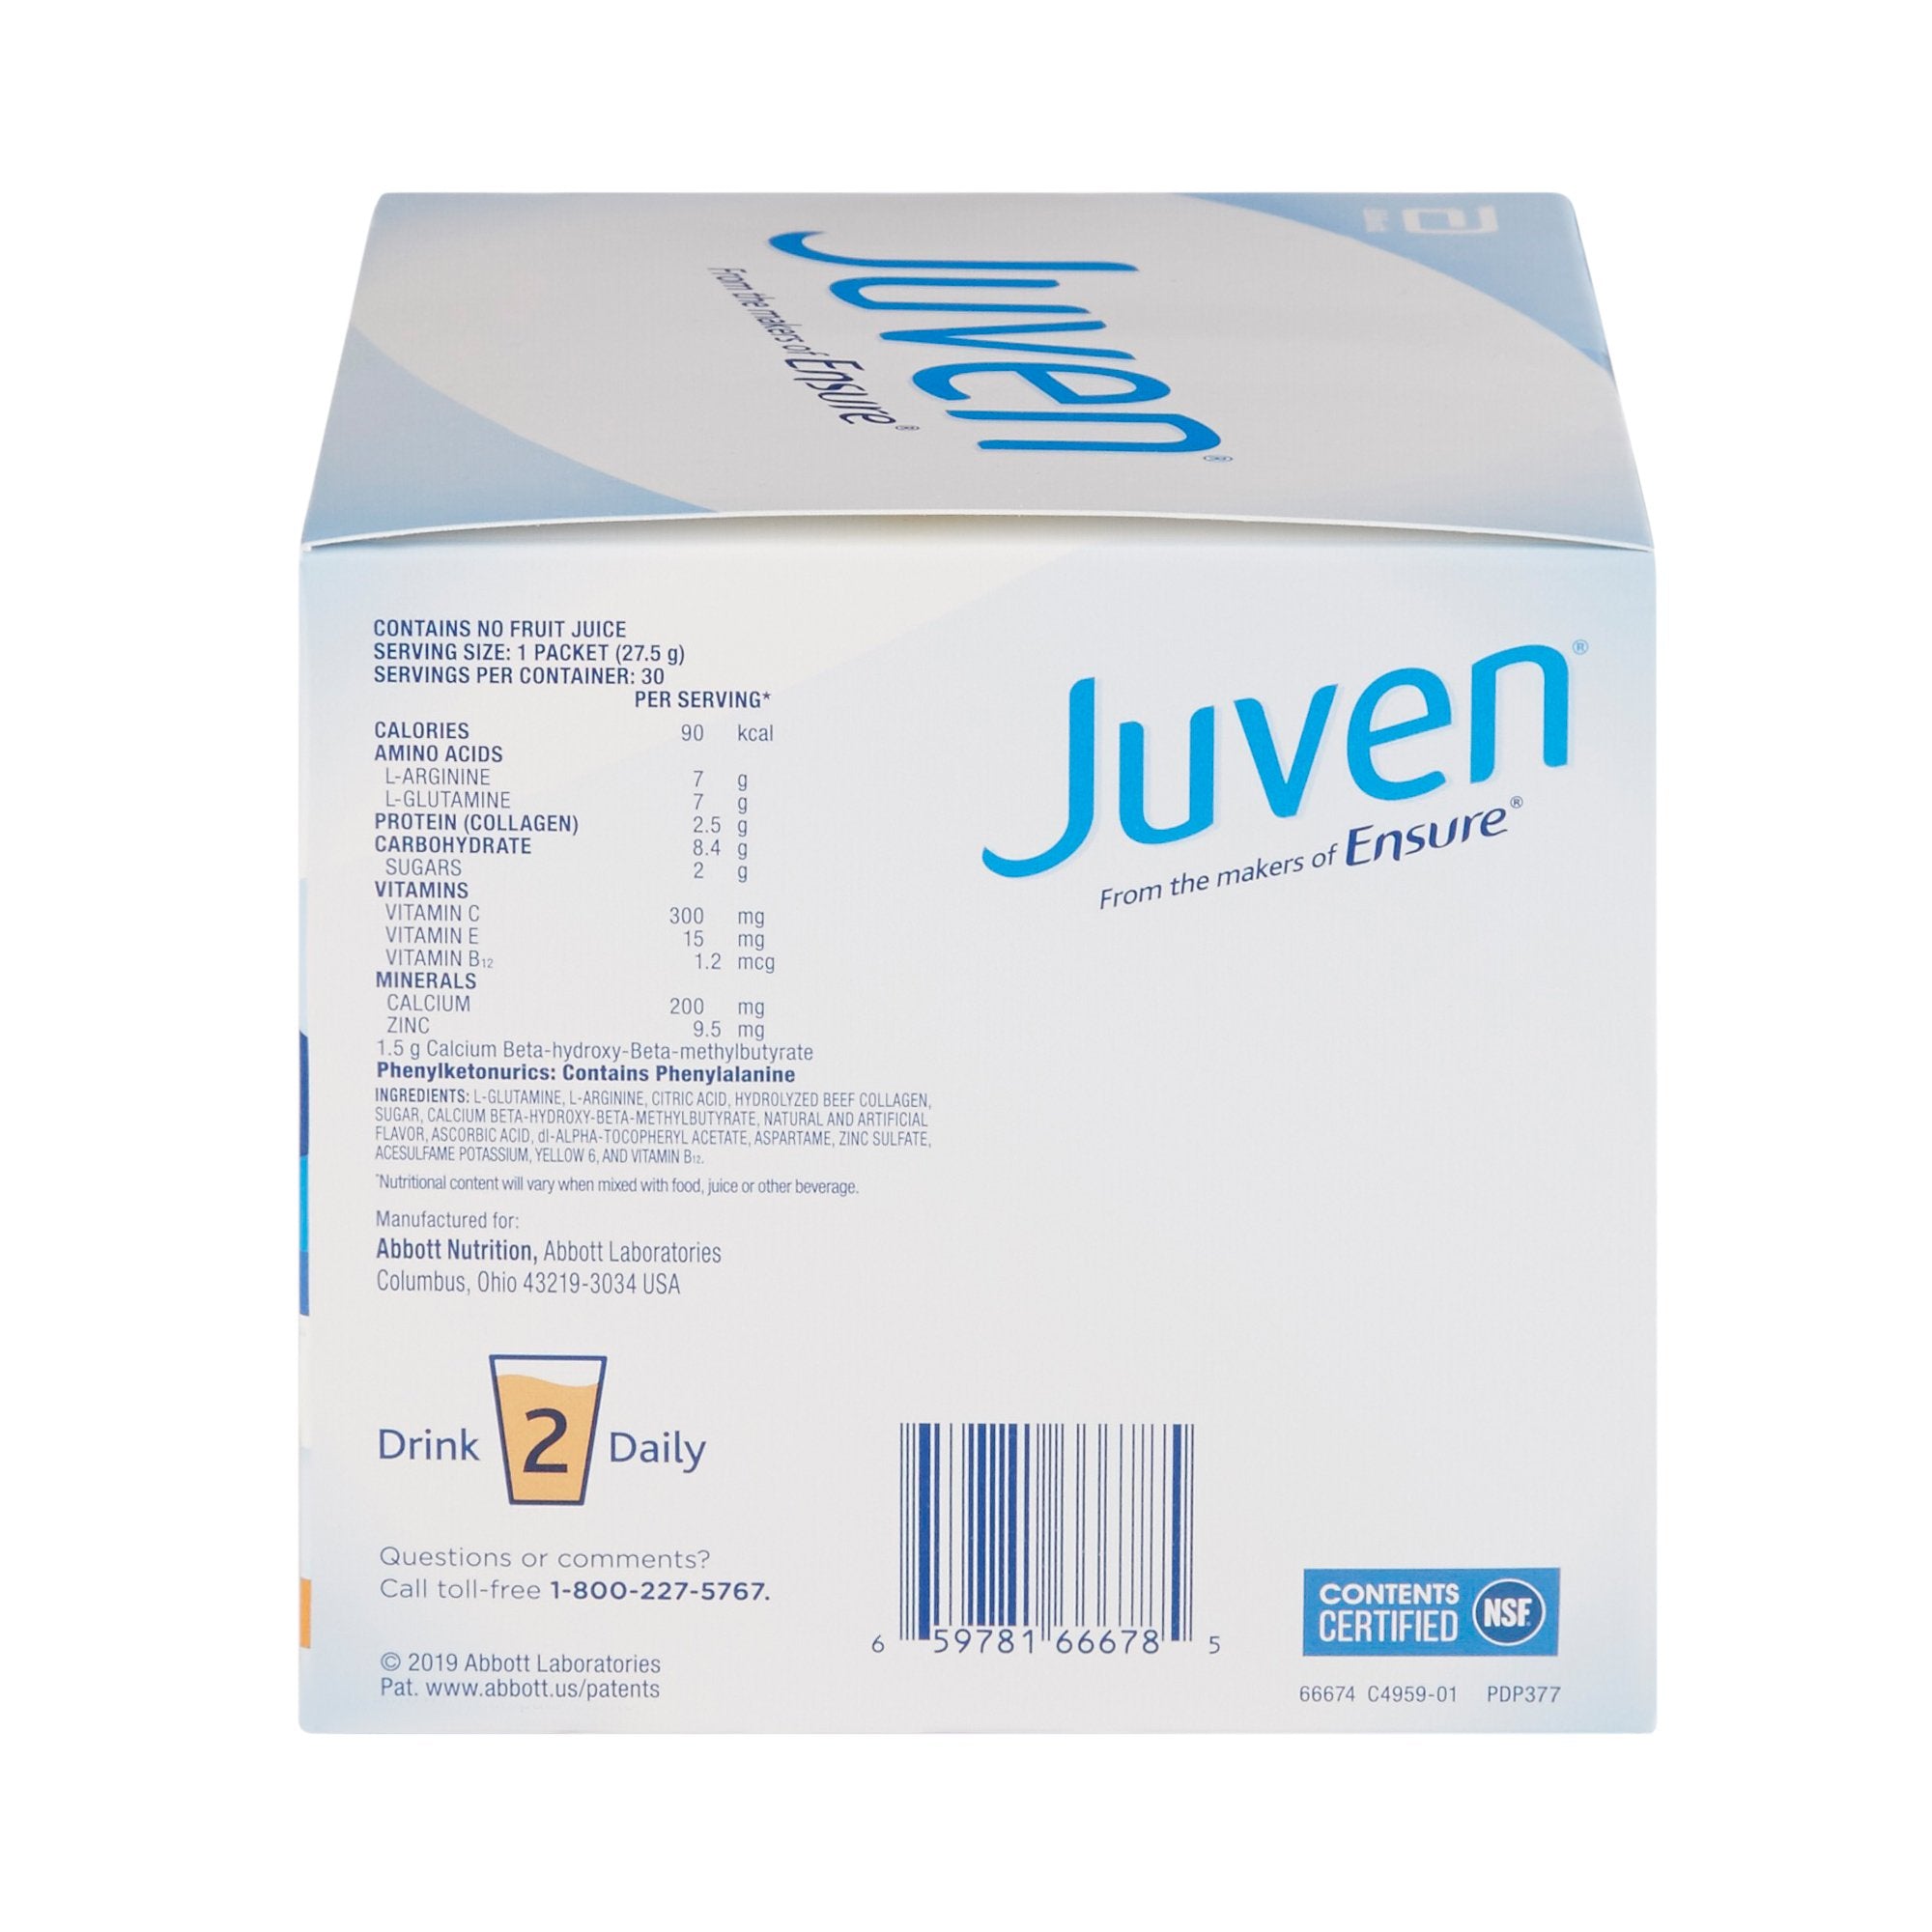 Oral Supplement Juven Orange Flavor Powder 0.97 oz Individual Packet